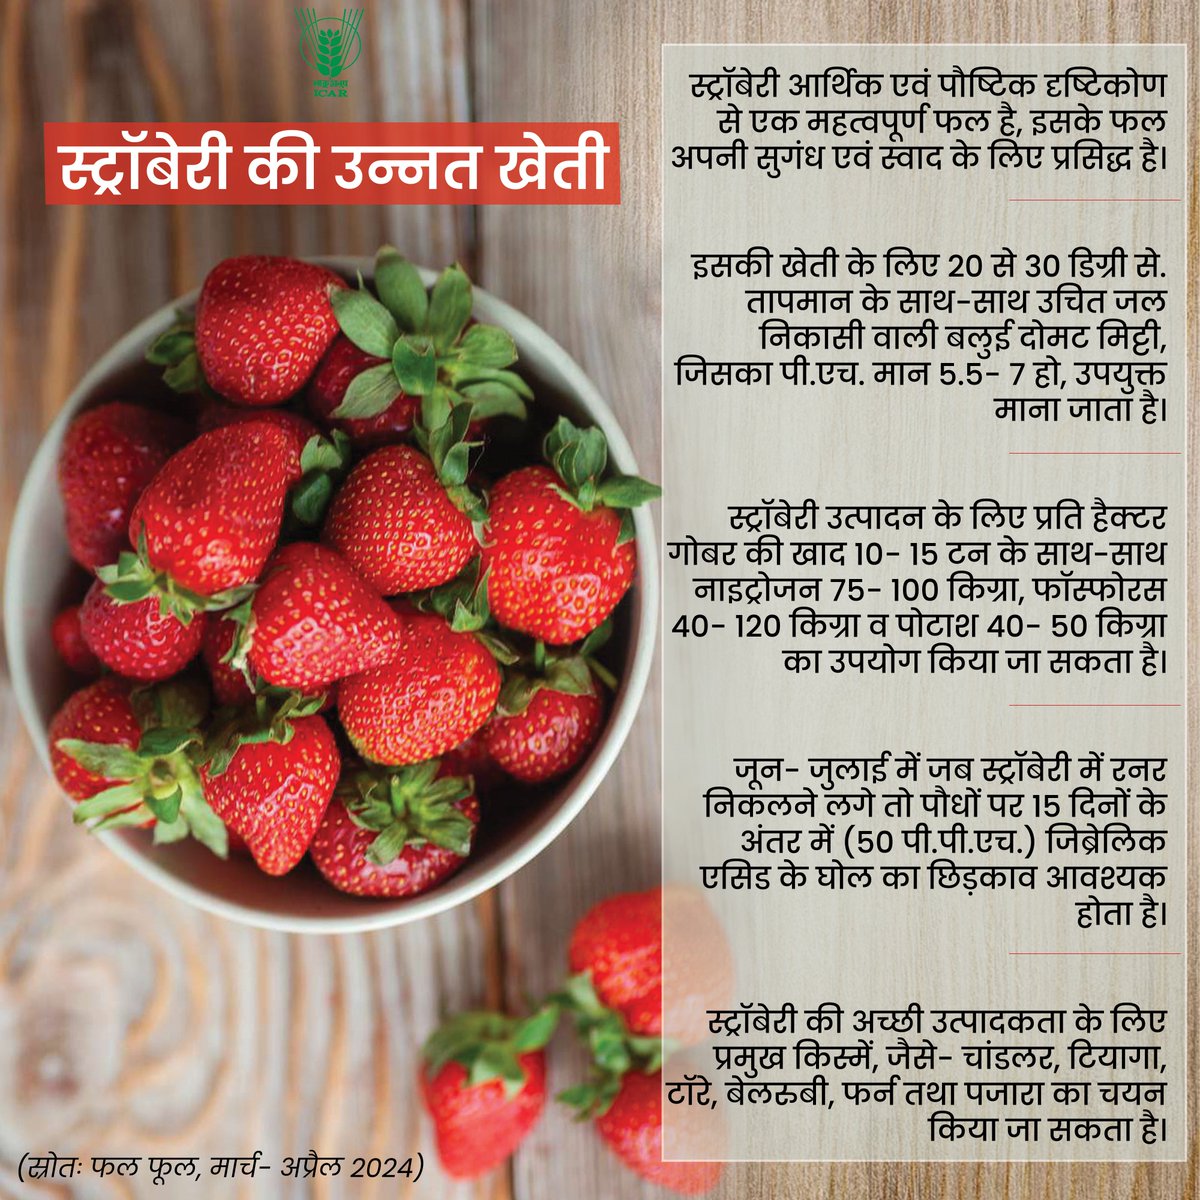 स्ट्रॉबेरी की उन्नत खेती #Agriculture  #ICAR #strawberry
@PMOIndia @mygovindia @PIB_India
@AgriGoI @DDKisanChannel

Read more: icar.org.in/phal-phool